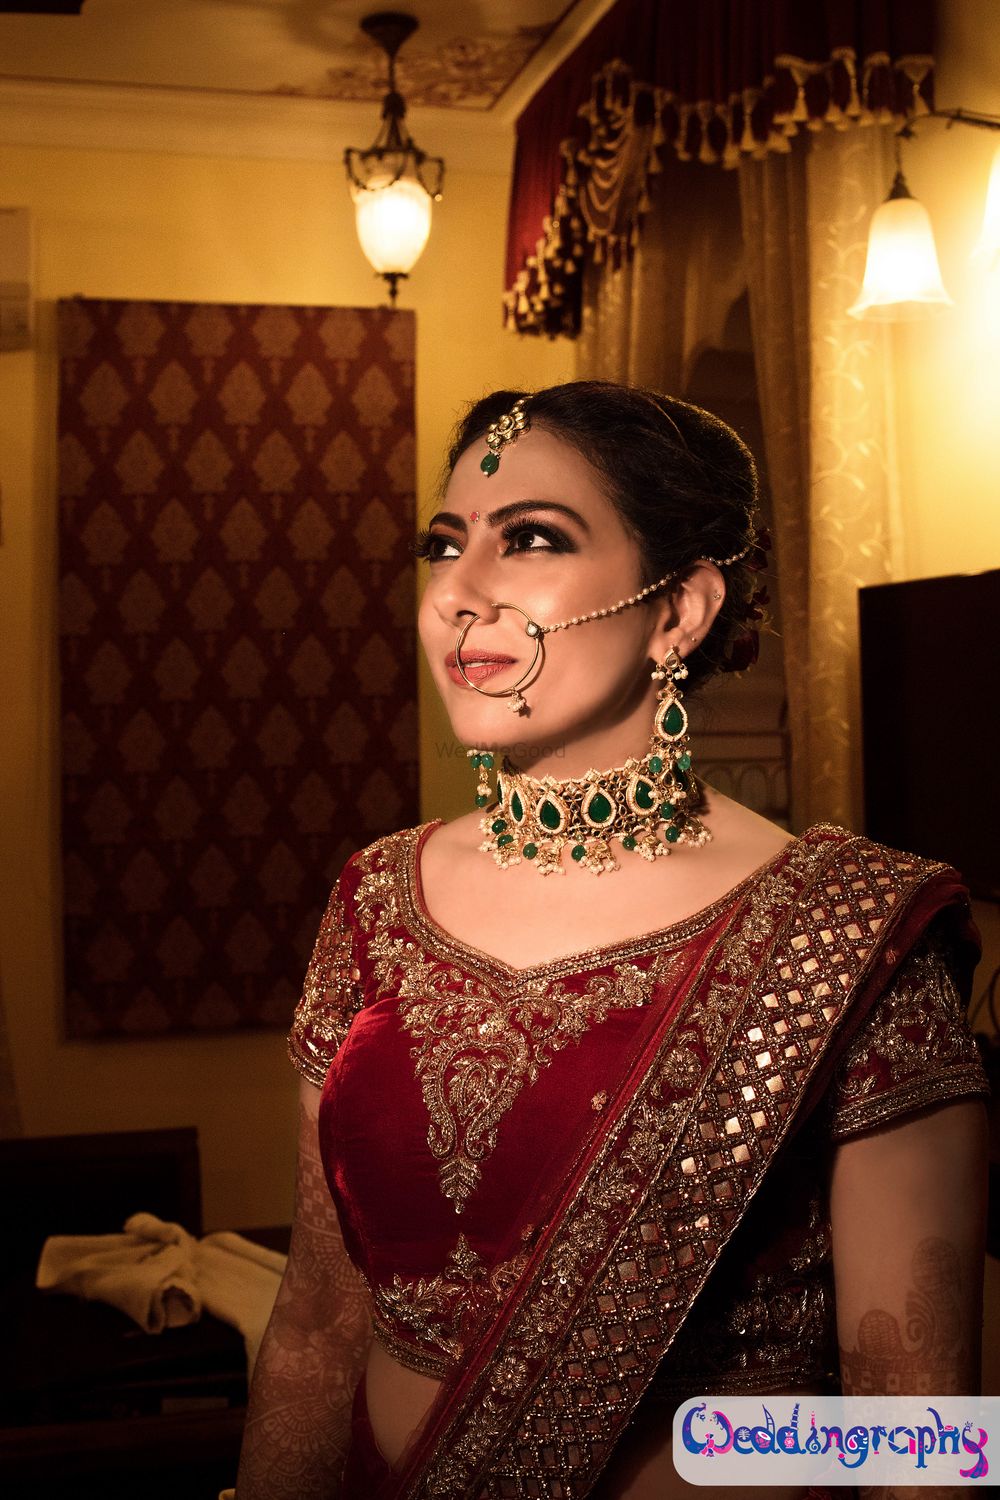 Photo From Radhika & Manish Destination Wedding - By Weddingraphy by M.O.M. Productions